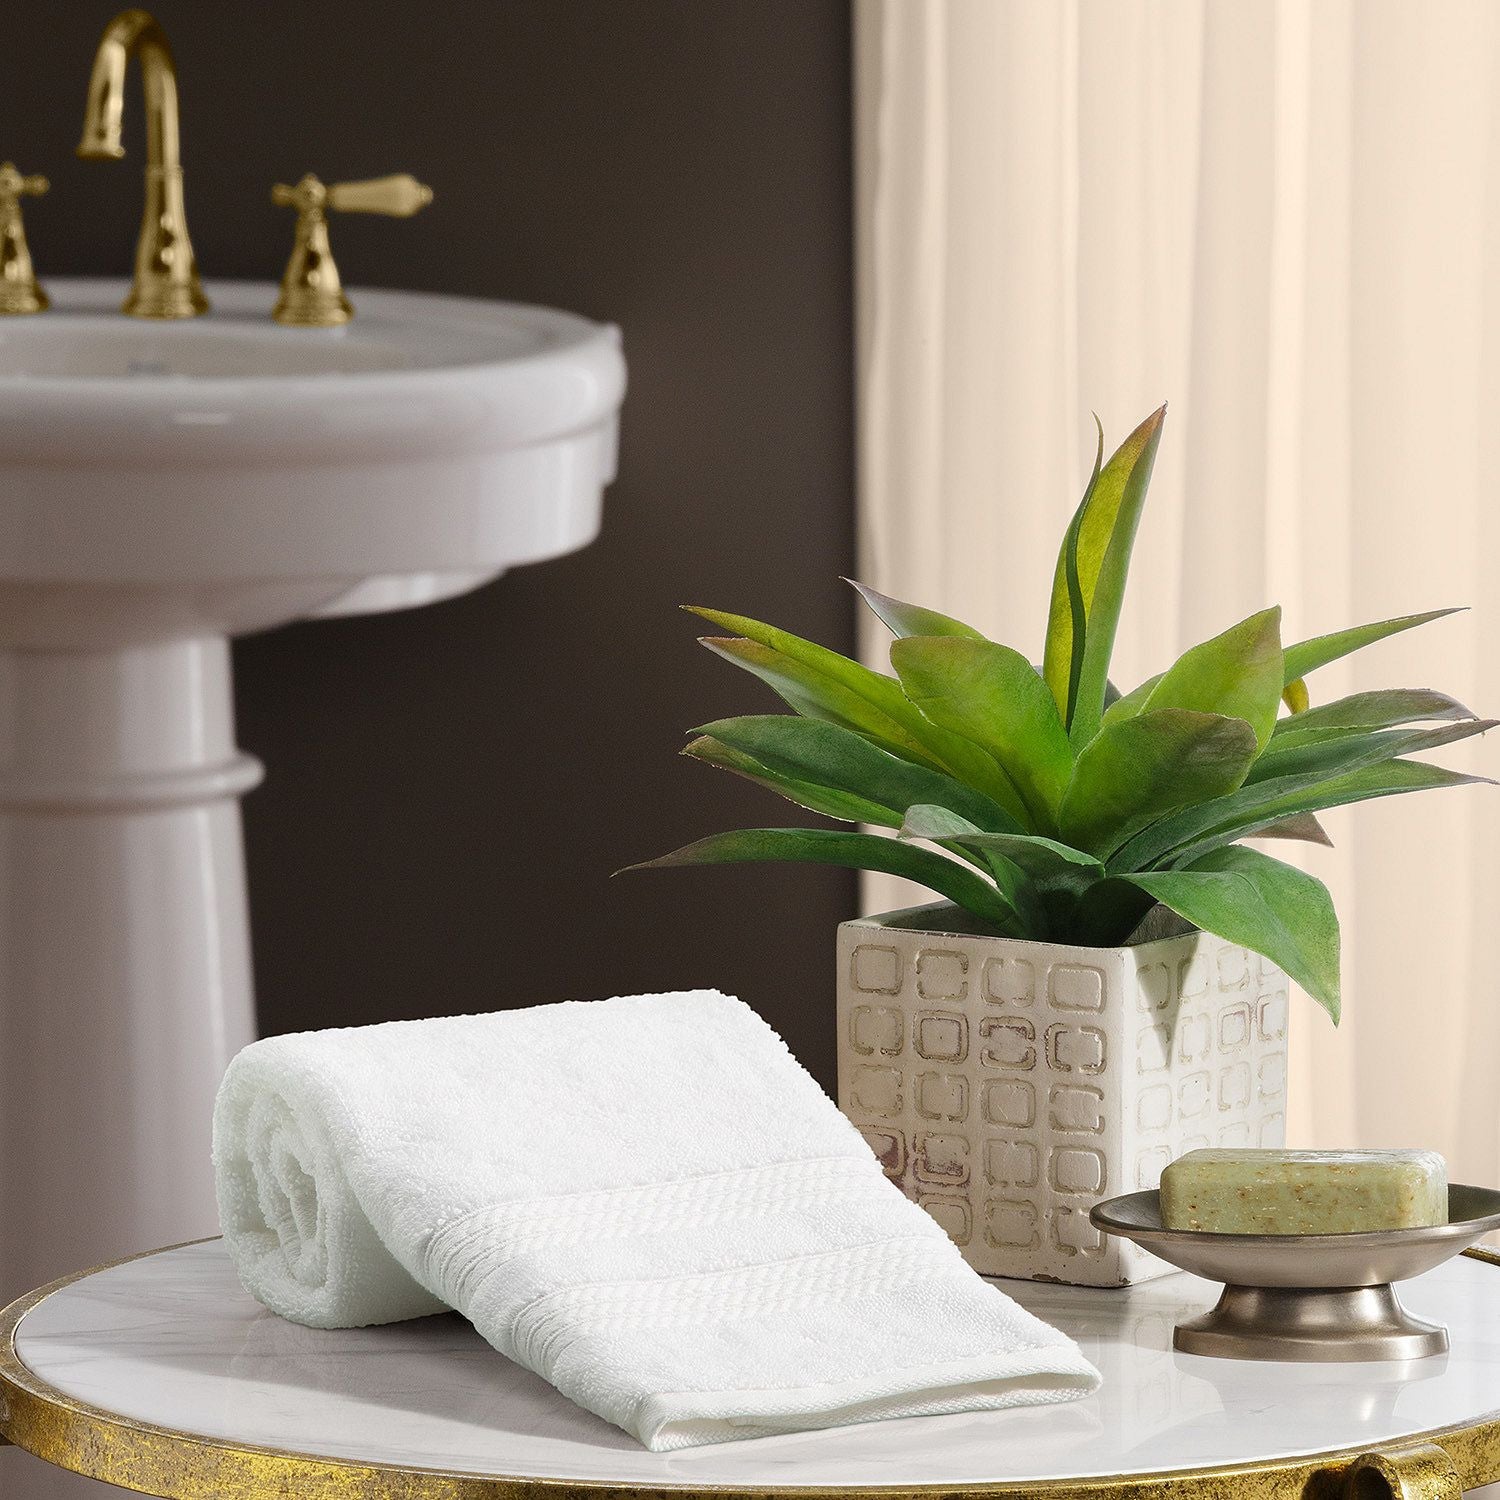 Hand Towels: Luxury Cotton Bathroom Hand Towel